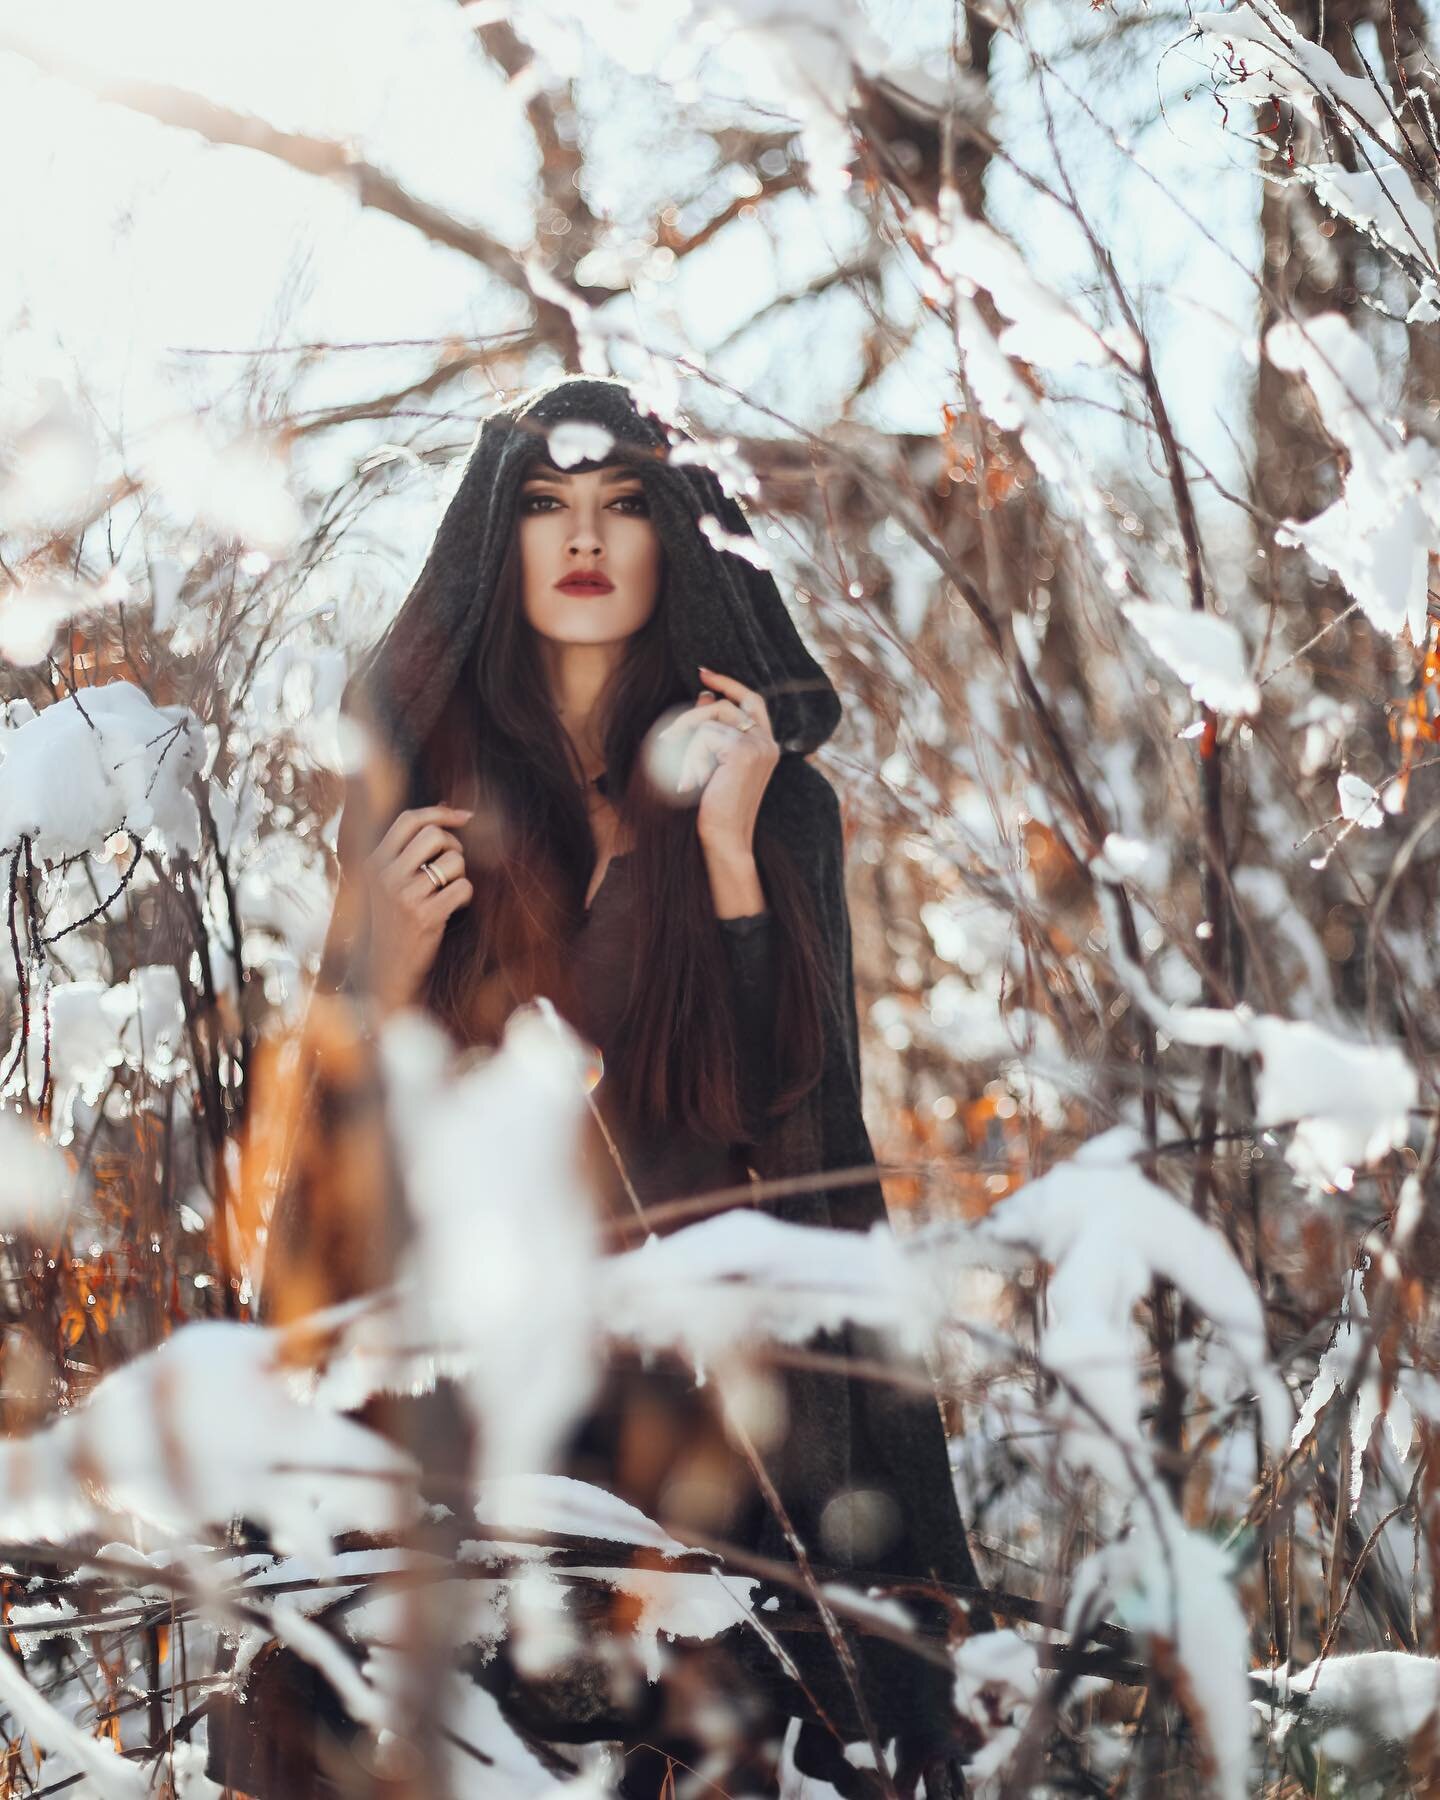 ❄️ Winter Wonderland ❄️ 

Model: @ellierich_artistry 
Outfit: @toonzshop_ 

#denver #denverphotographer #denverphotography #winter #snow #portait #fashion #colorado #coloradophotography #coloradophotographer